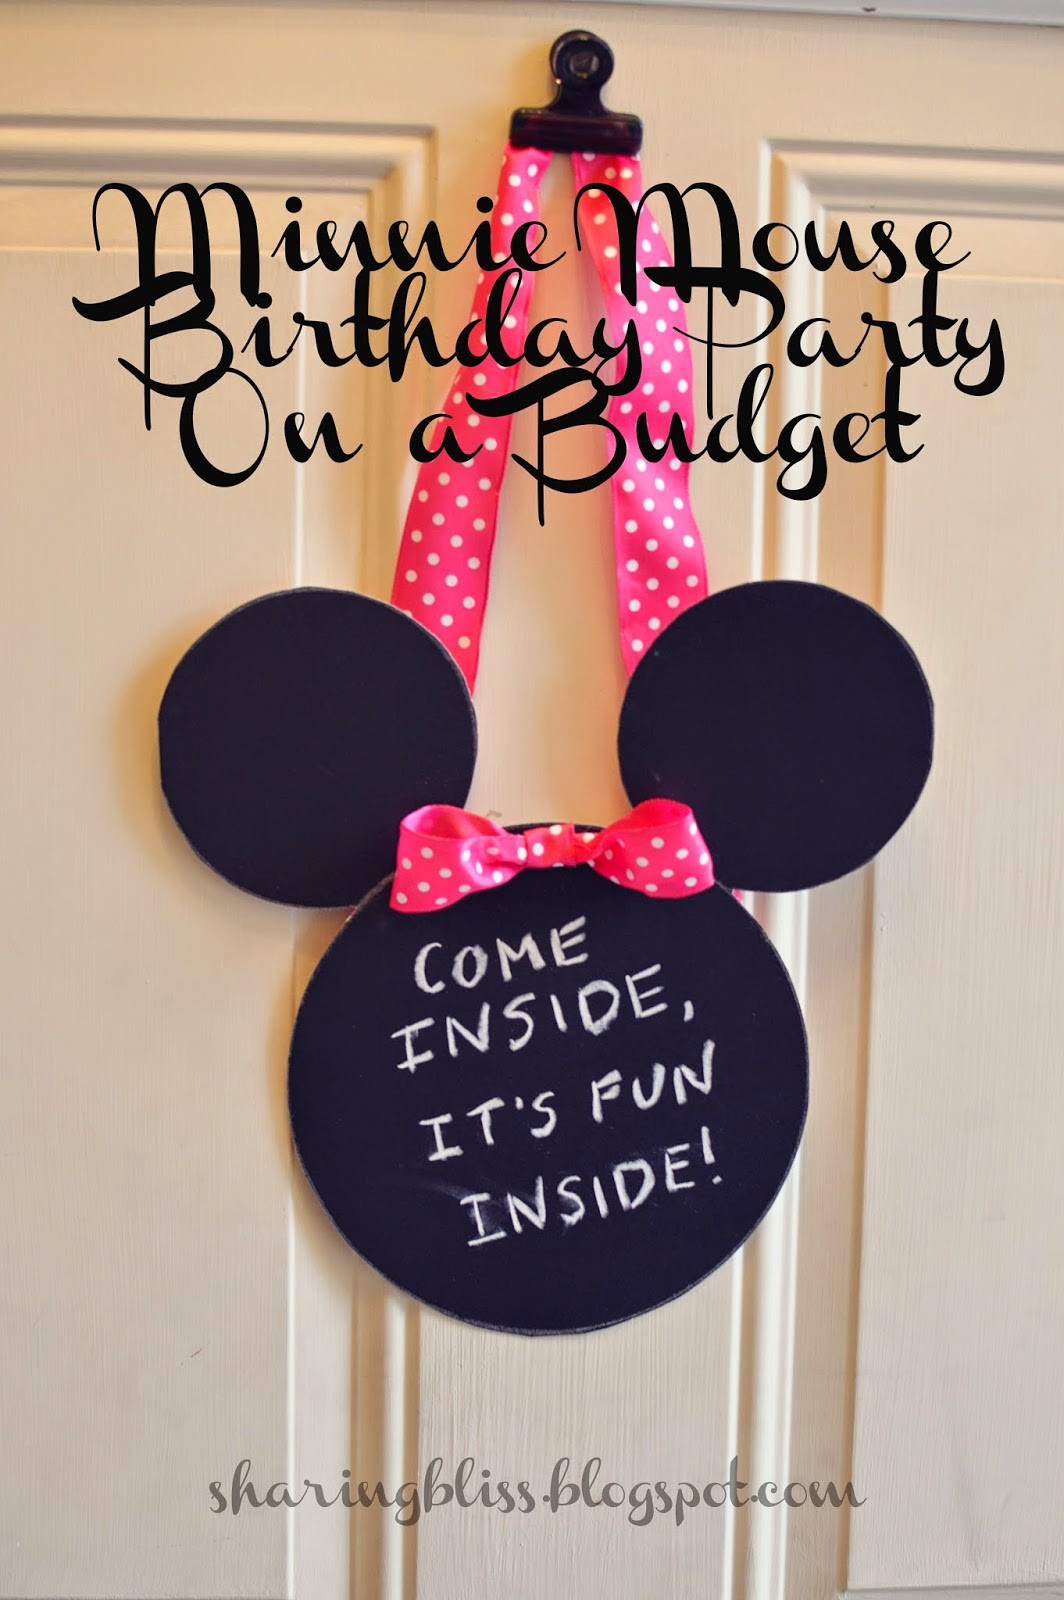 Minnie Mouse Birthday Decor
 Minnie Mouse Birthday Party on a Bud